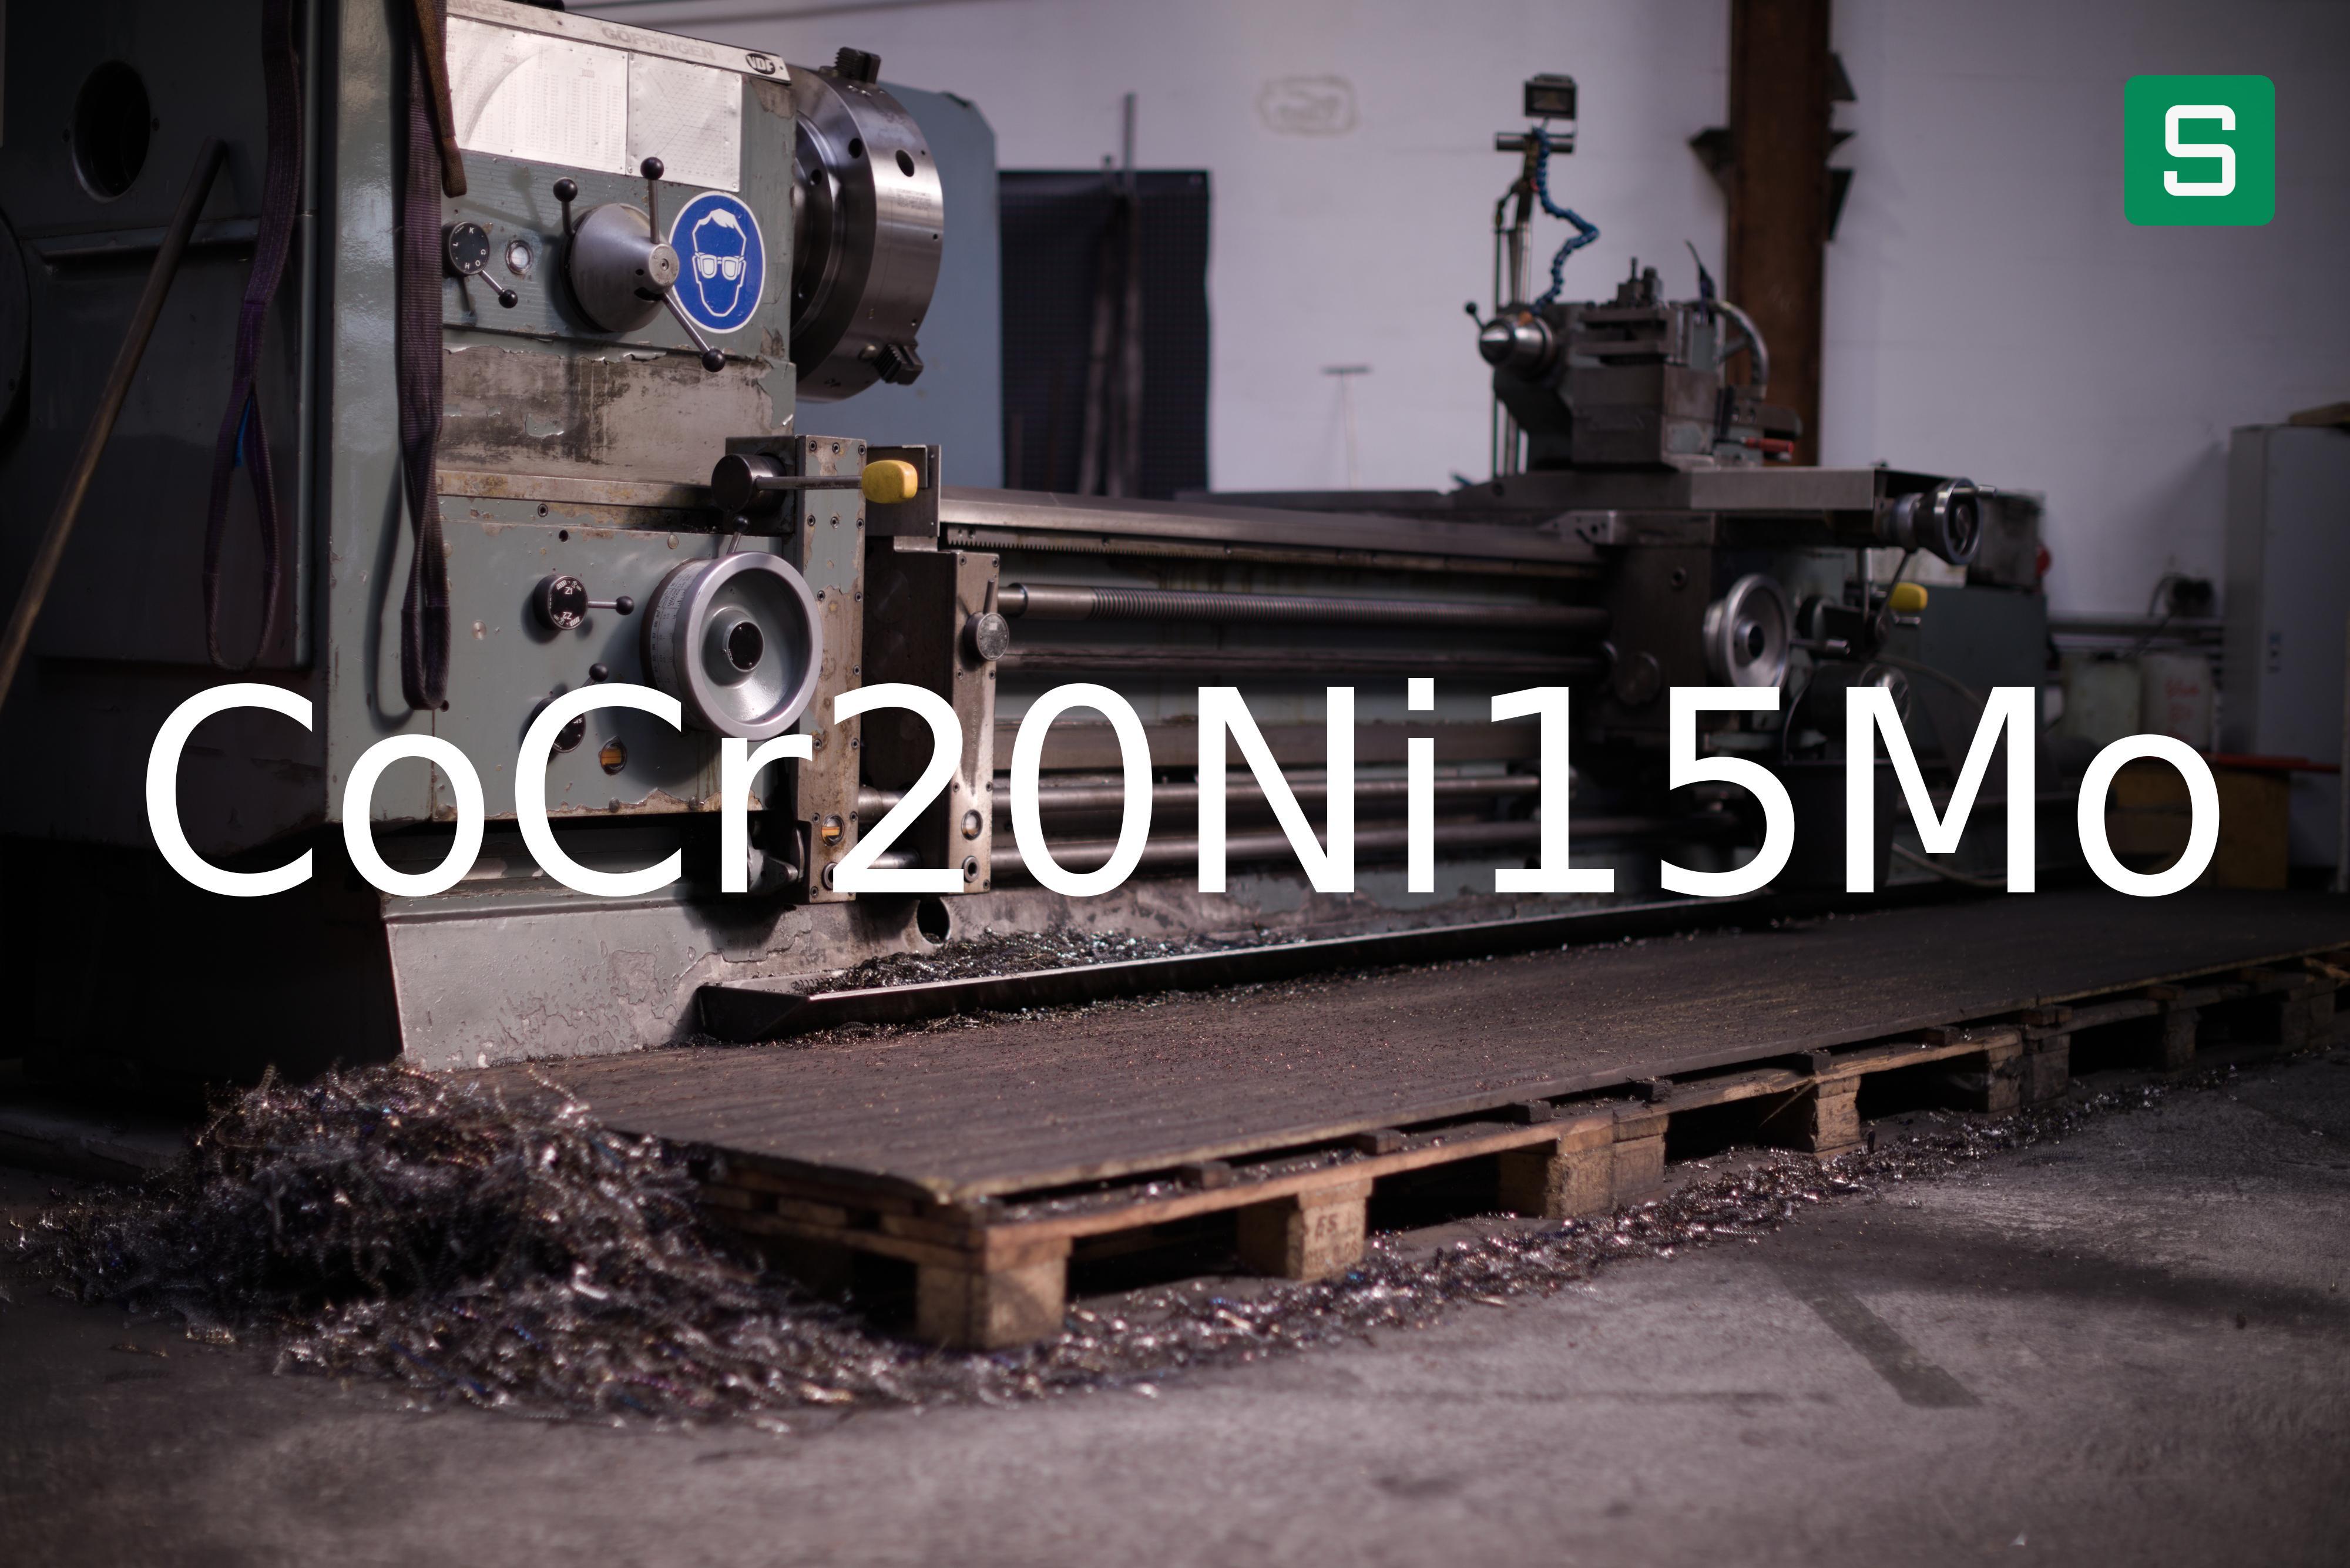 Steel Material: CoCr20Ni15Mo